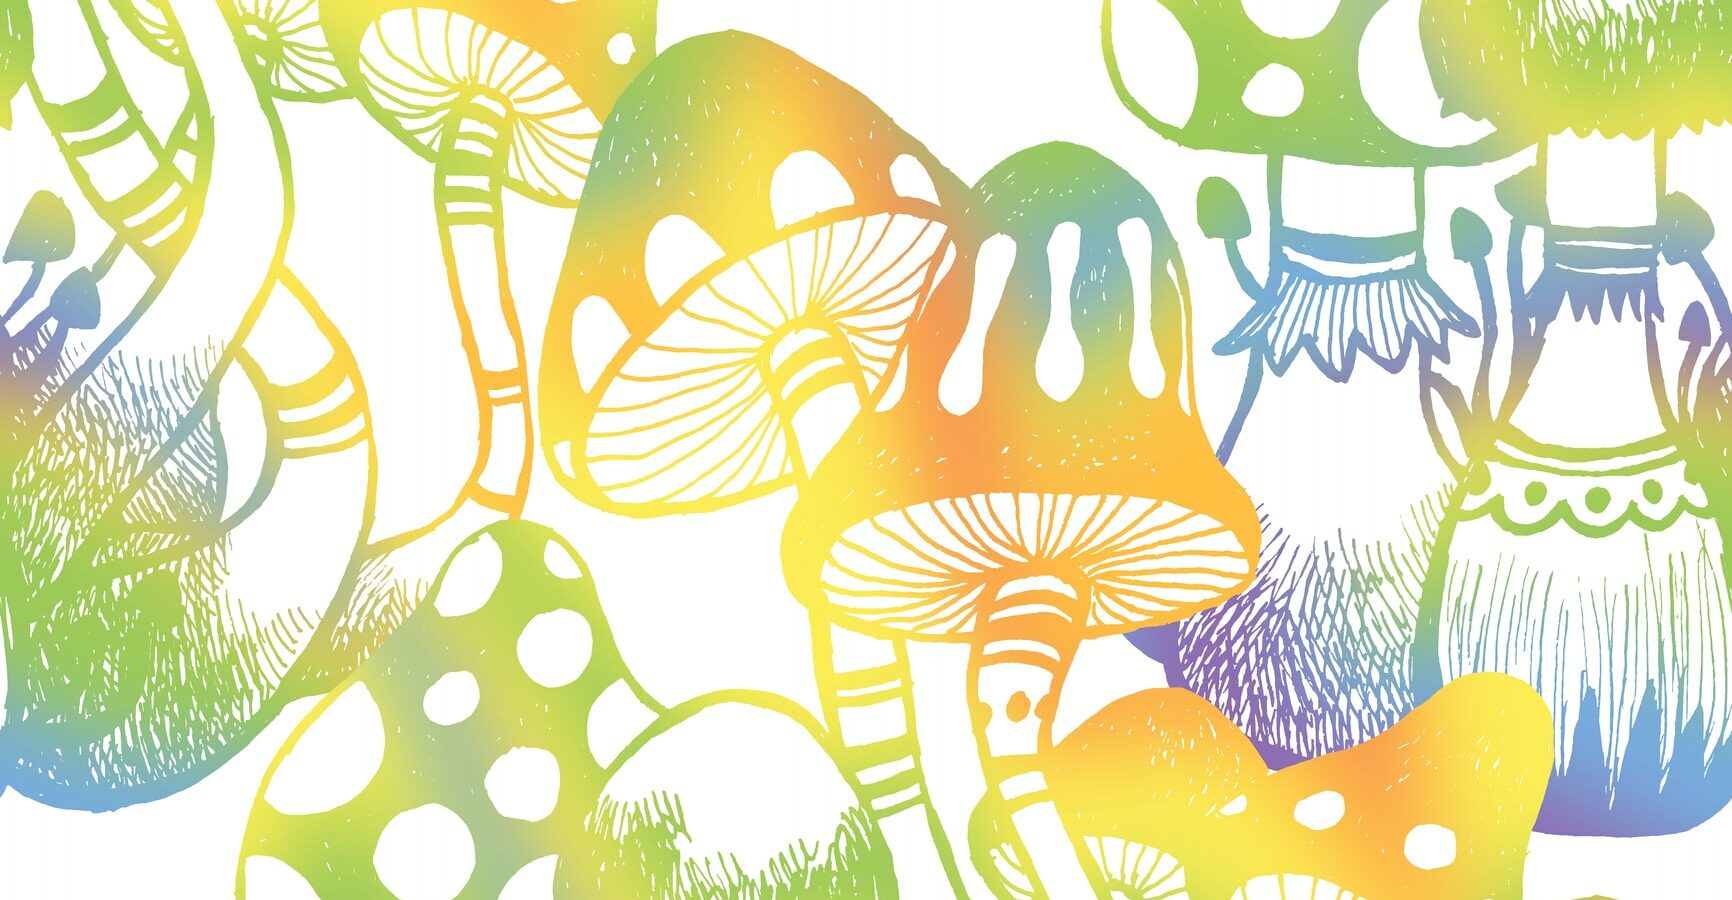 Understanding the magic of the mushrooms